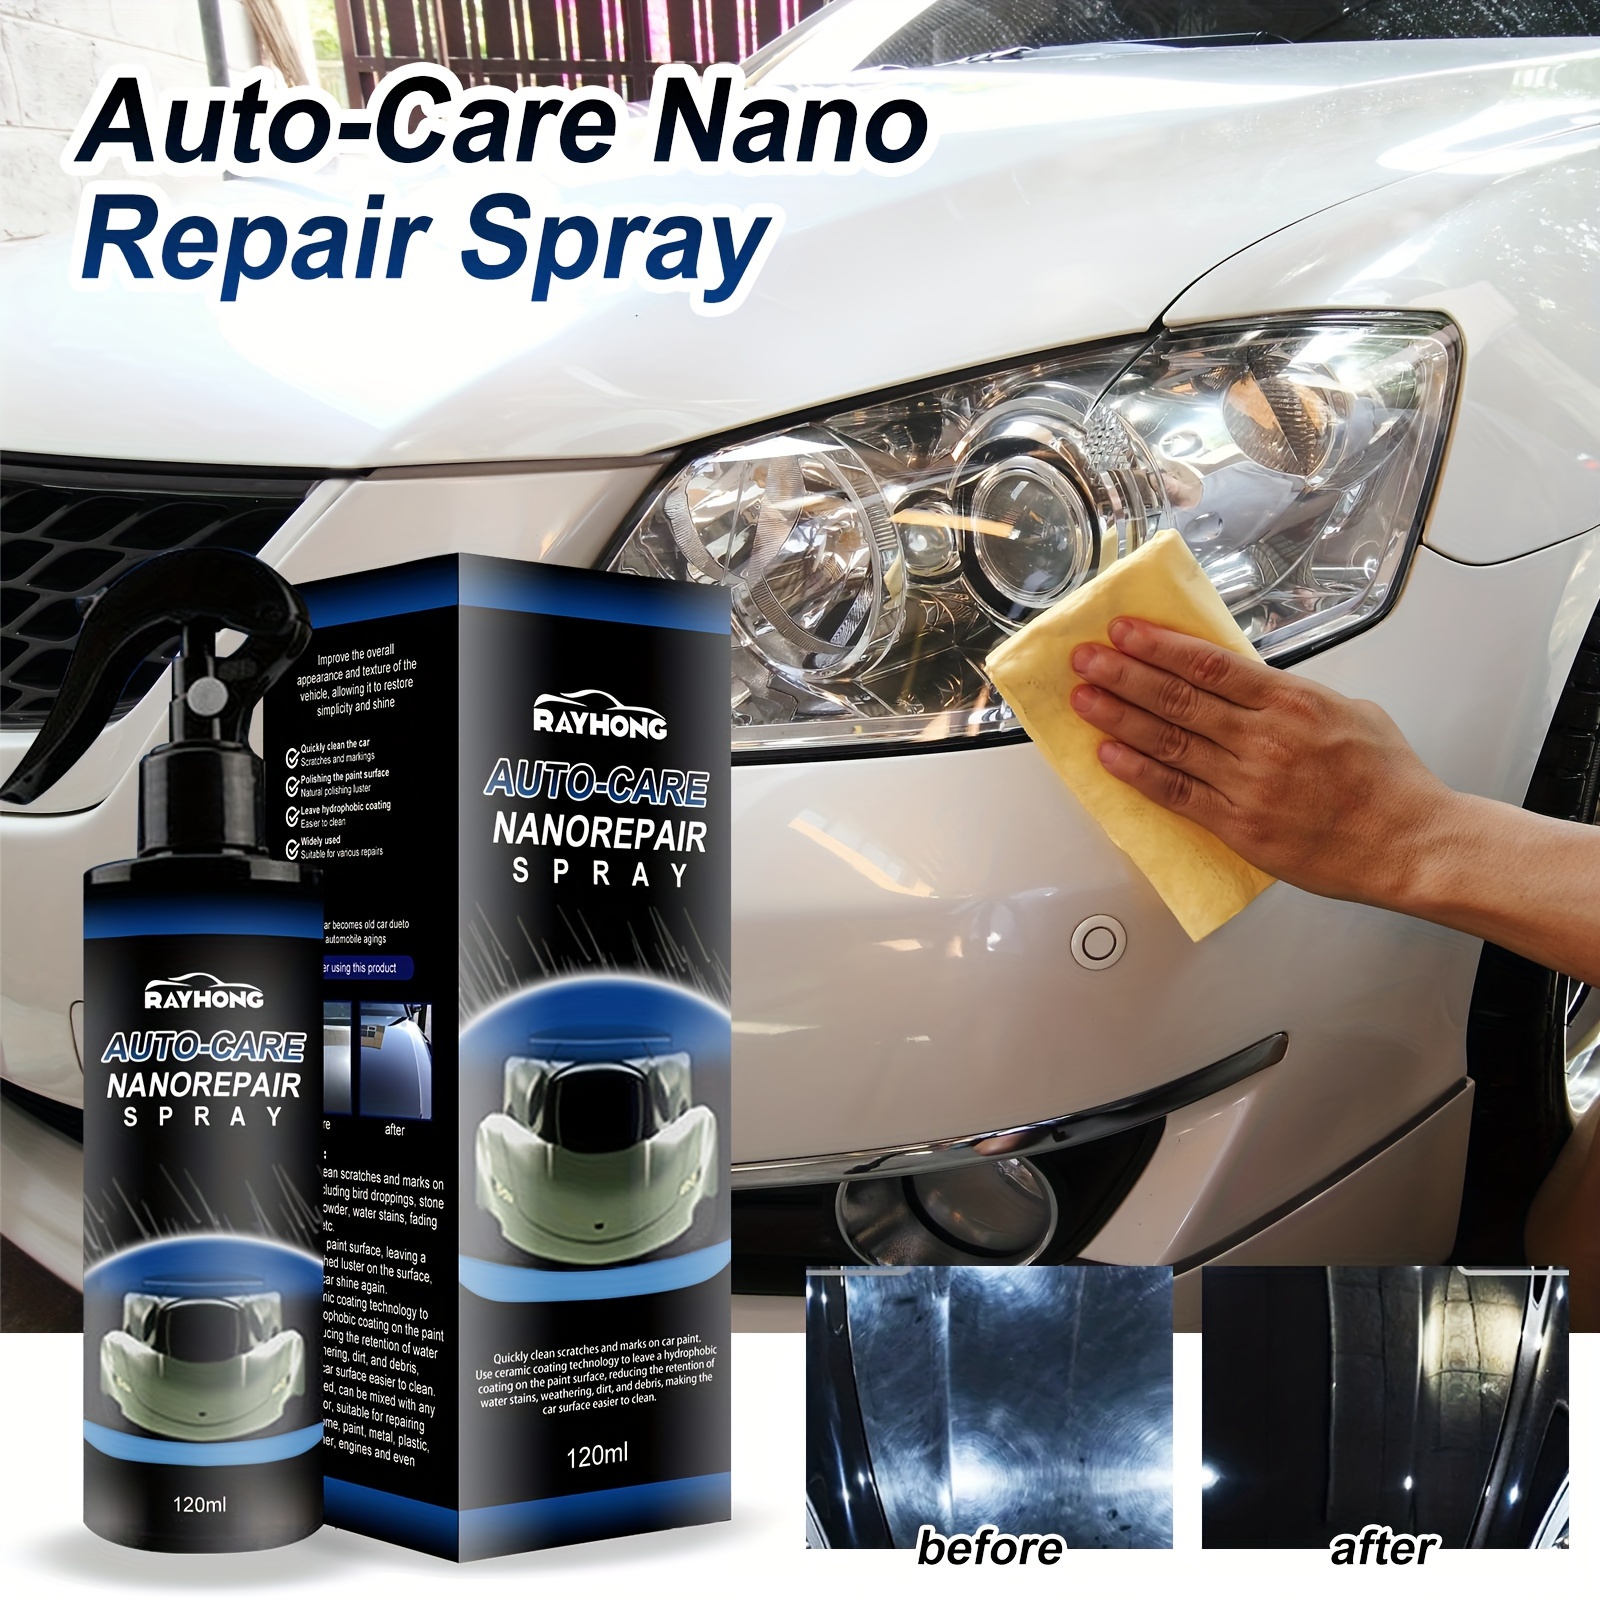 Scratch Repair Wax for Car, Car Paint to Scratch artifact, Car Scratch  Repair Nano Spray, Professional Car Paint Scratch Repair Agent, 2023 New 3  In 1